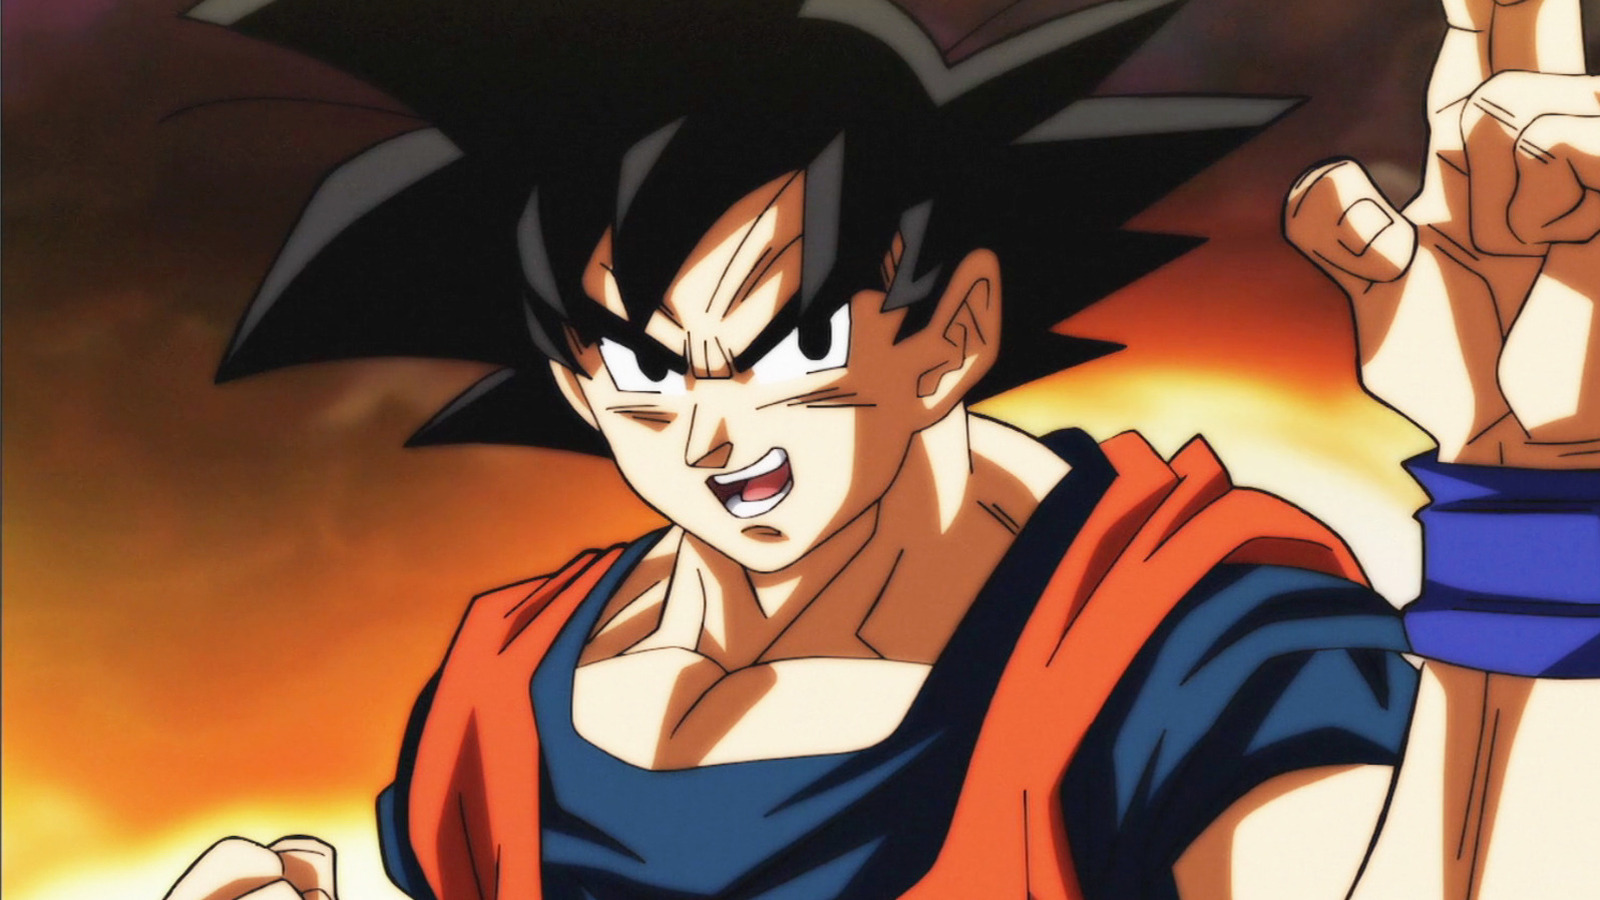 Goku Levels Up Again In 'Dragon Ball Super', Keeps His Black Hair